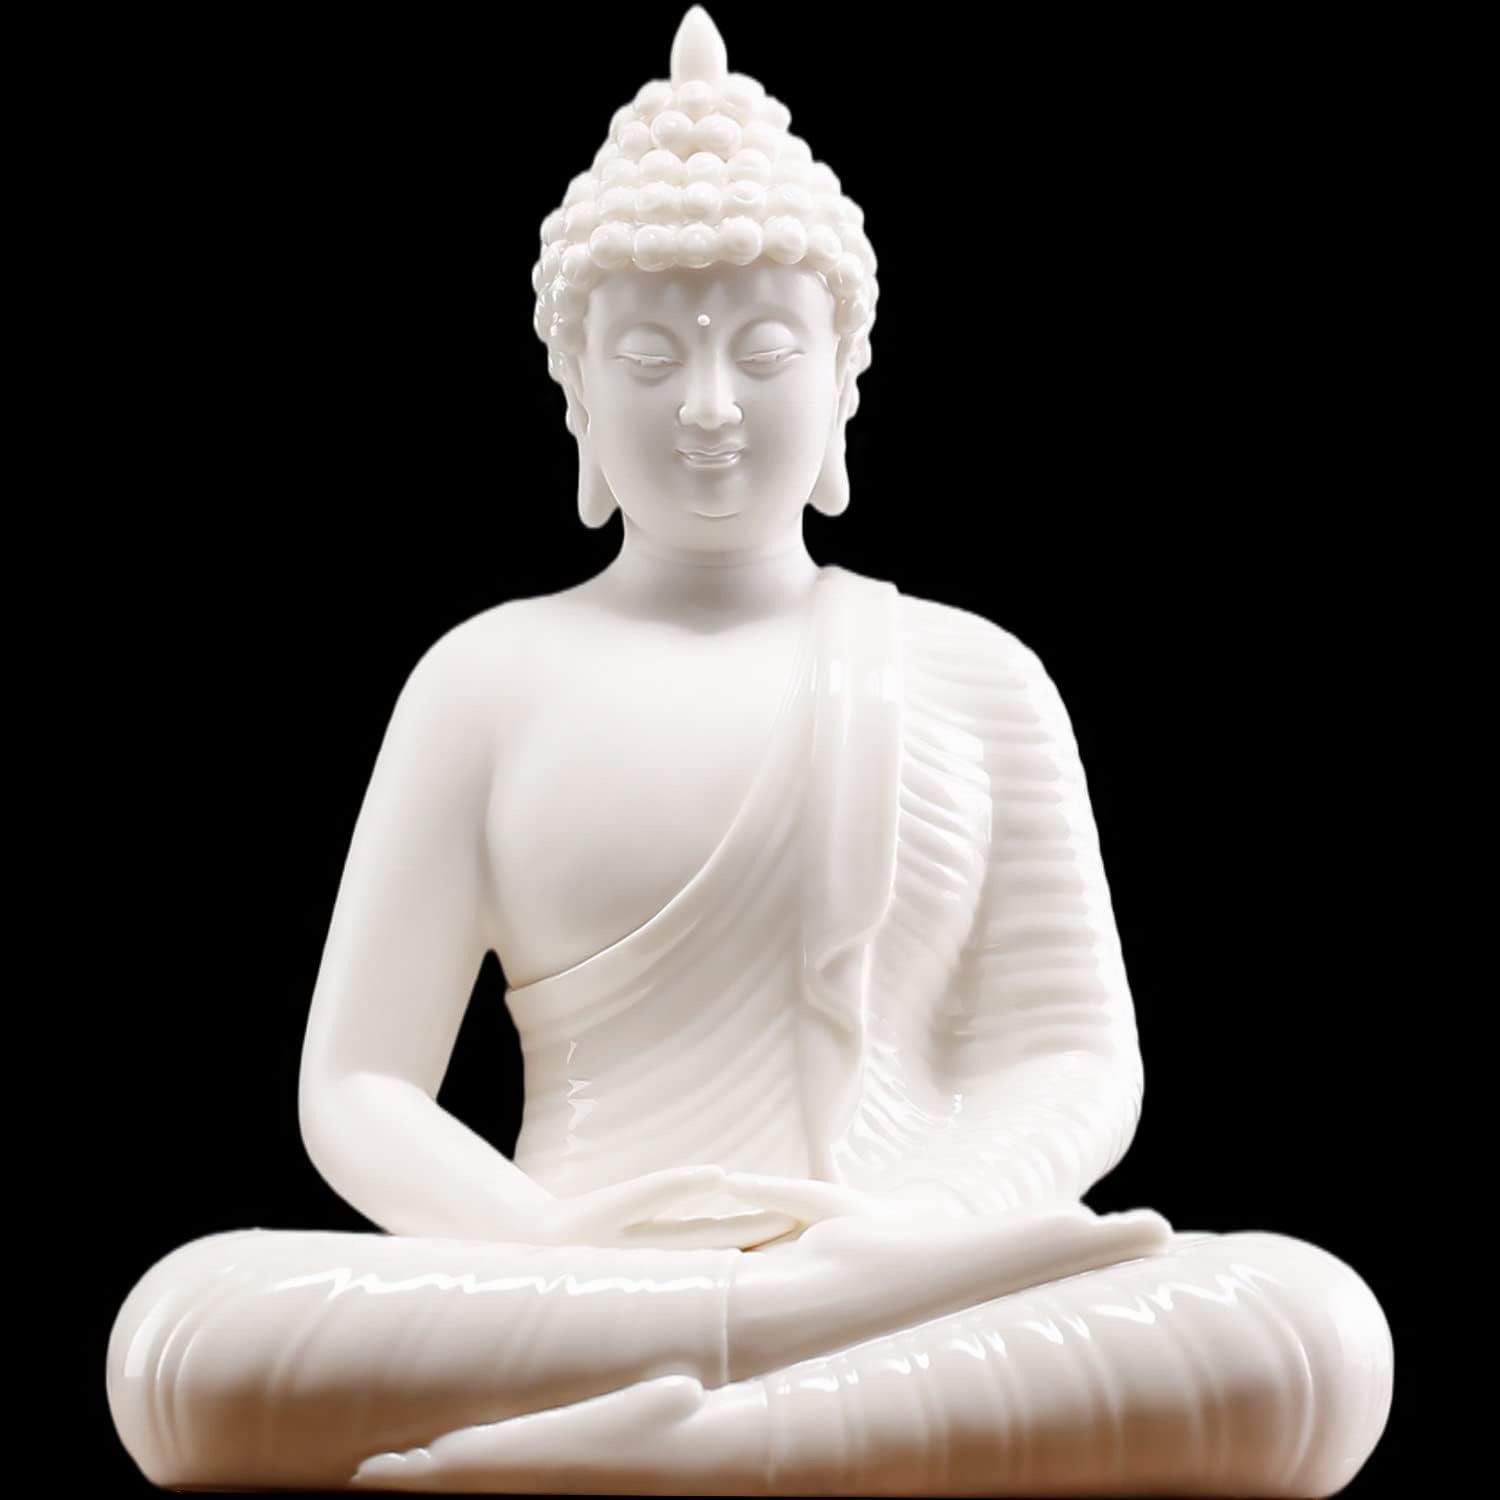 6 Inch Small White Buddha Statue for Home Decor, Ceramic Meditation Buddha Decor